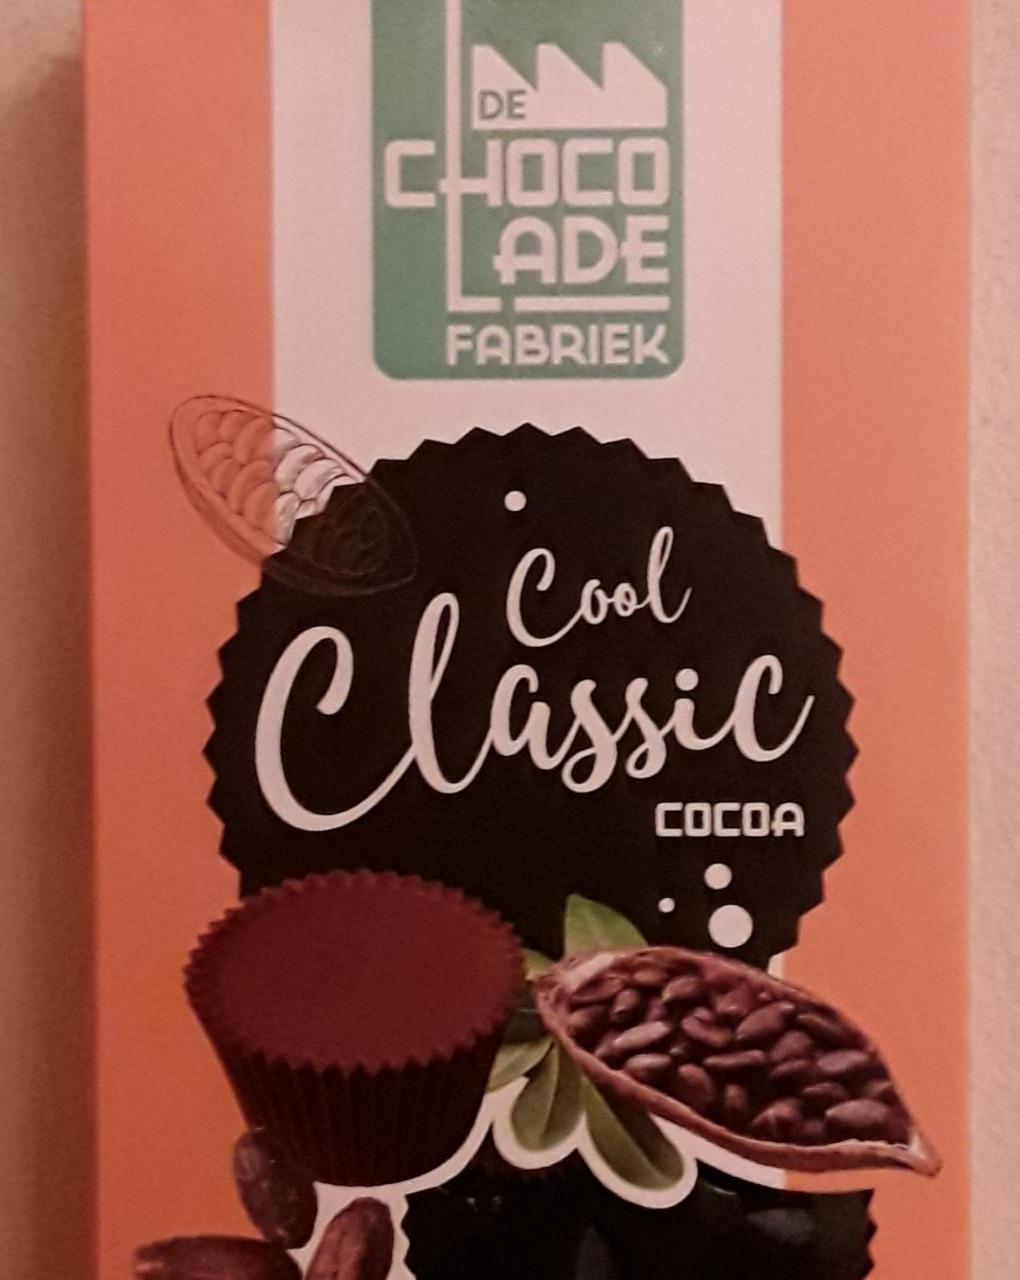 Fotografie - Cool classic cocoa De Chocolade Fabriek